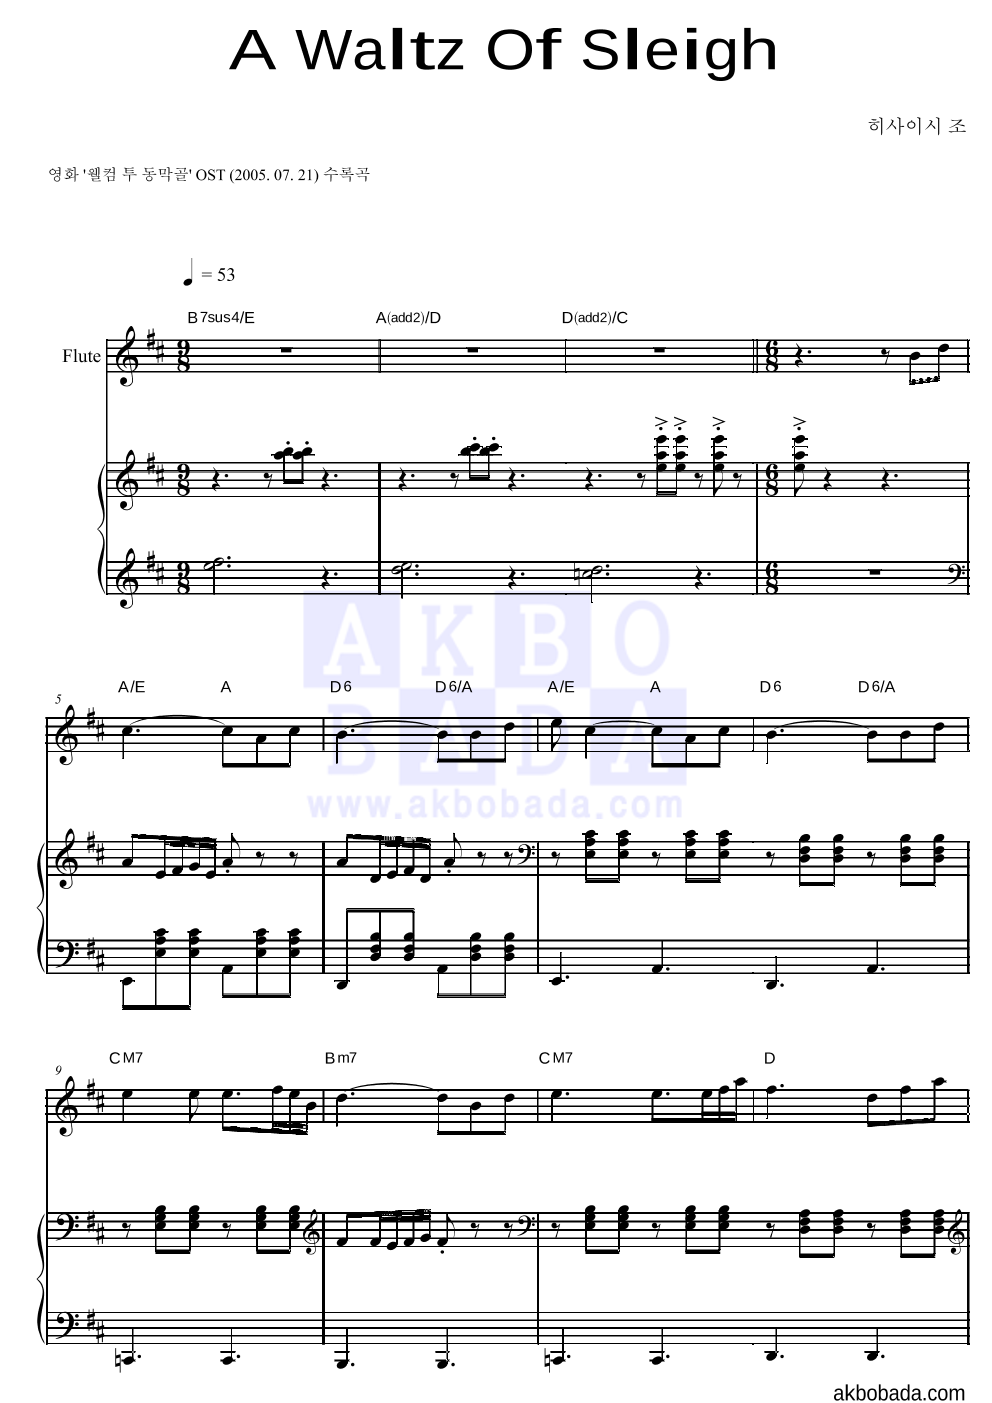 Hisaishi Joe - A Waltz Of Sleigh 플룻&피아노 악보 